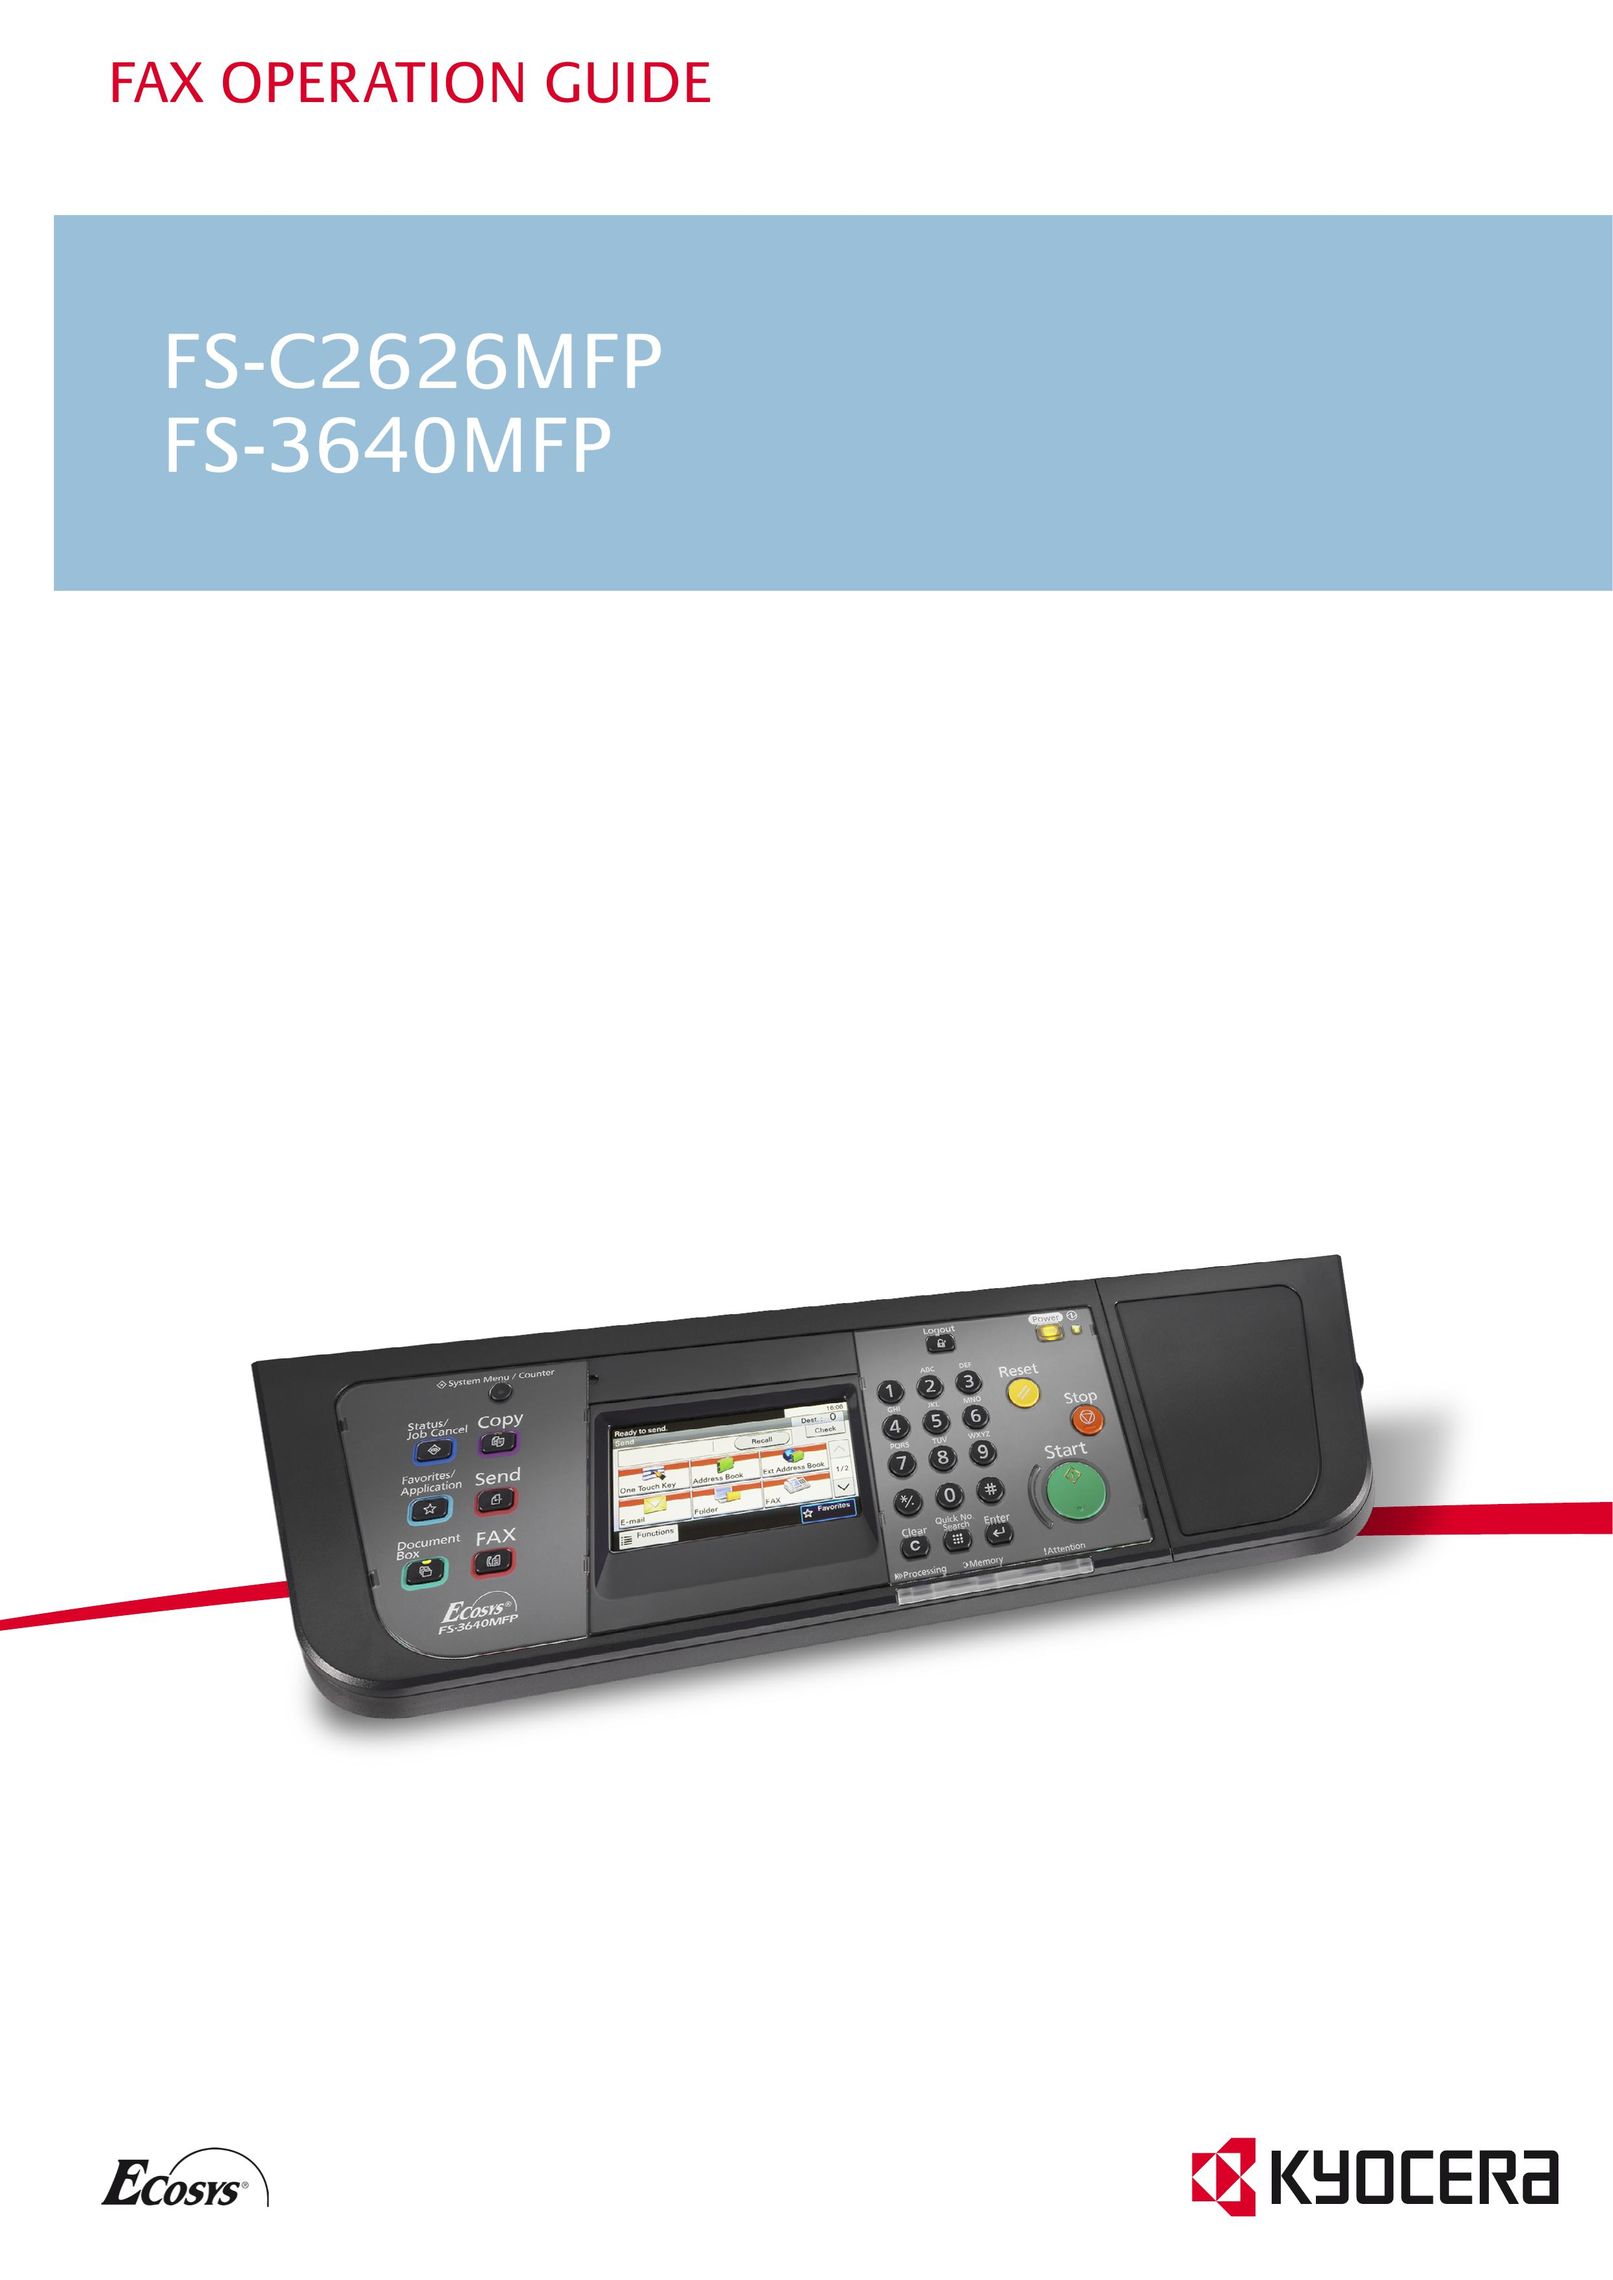 Kyocera FS-C2626MFP Fax Machine User Manual